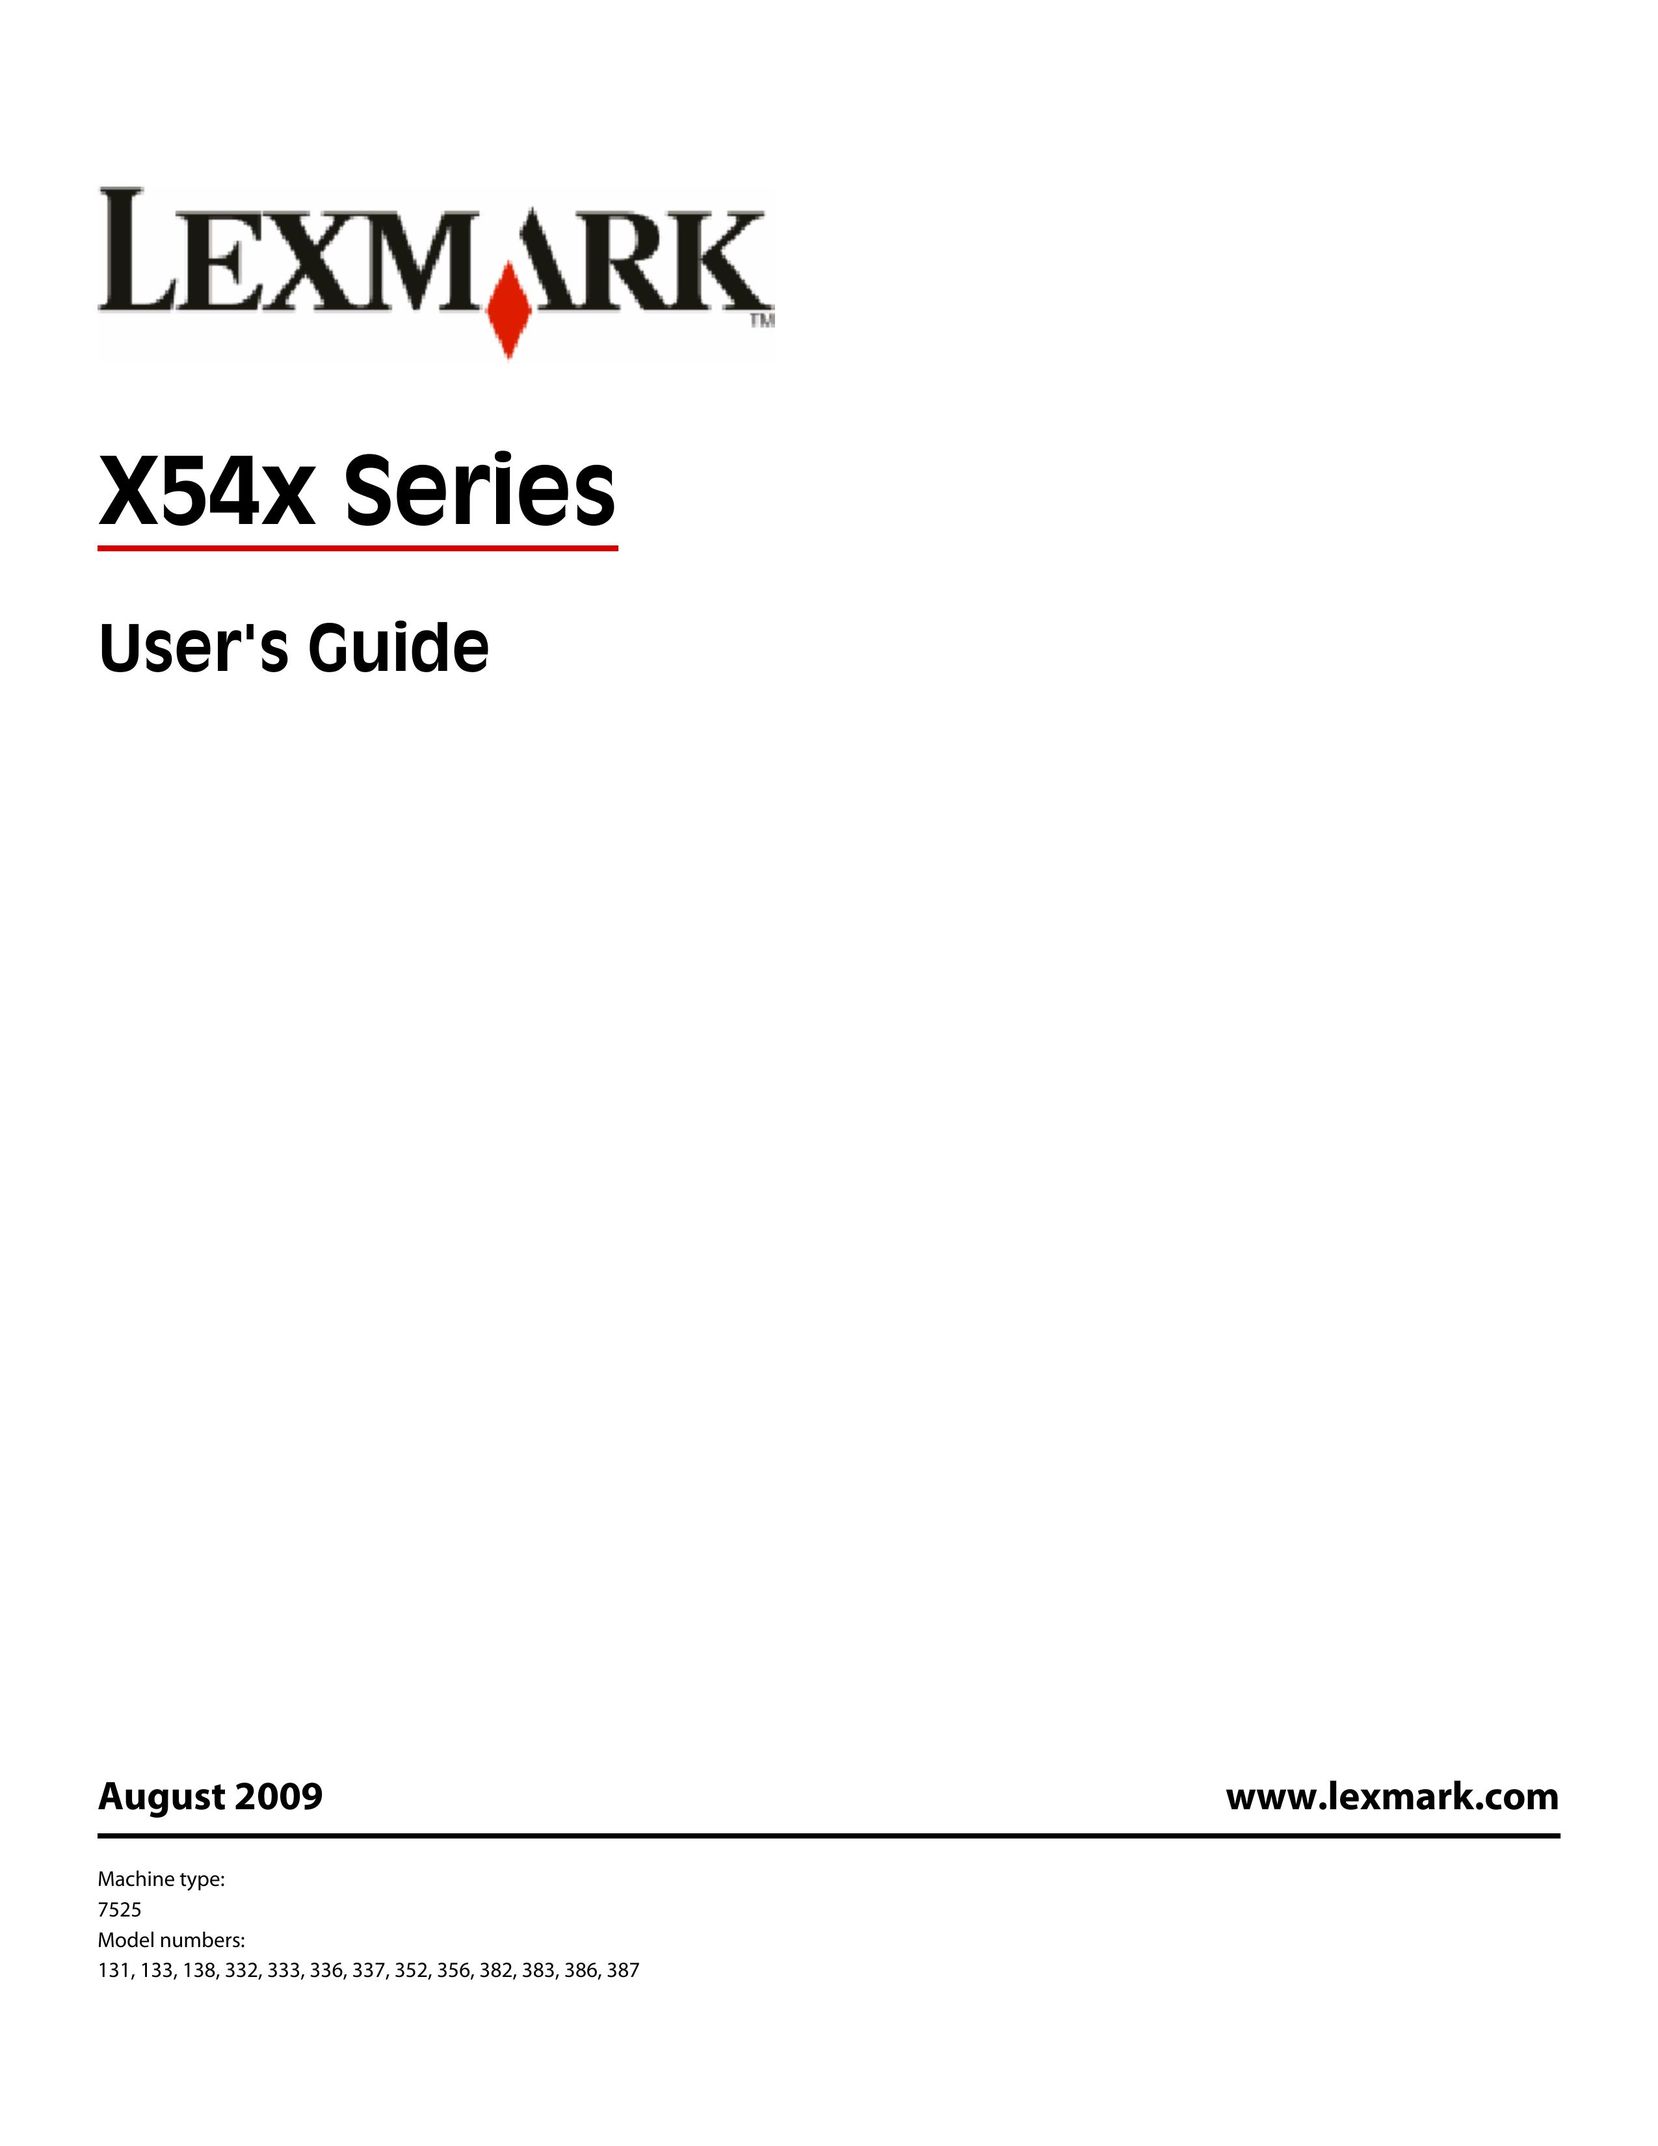 Lexmark 333 All in One Printer User Manual